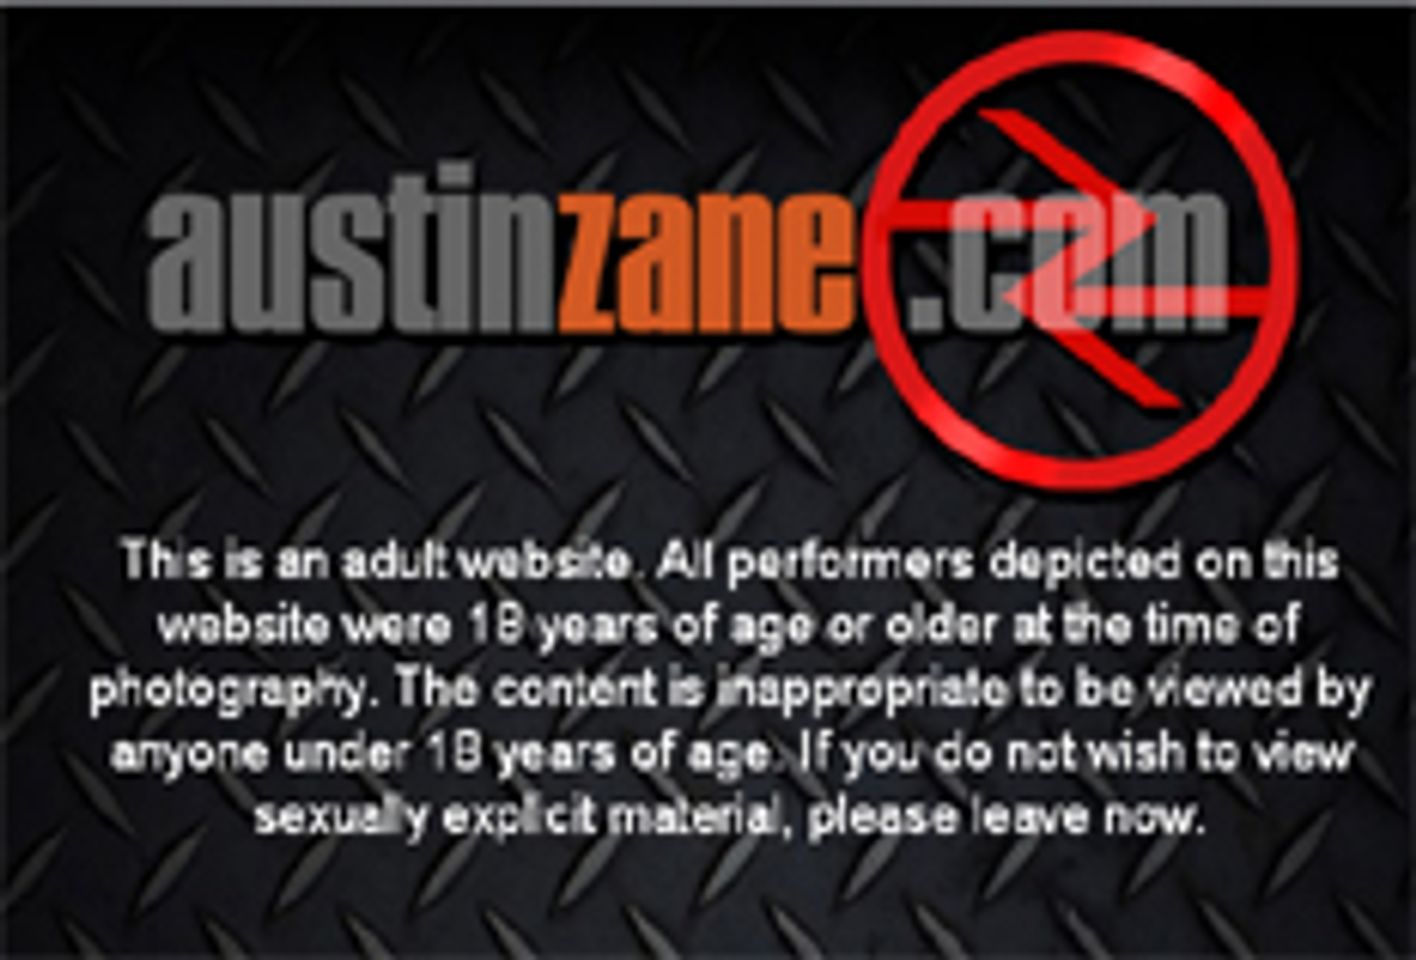 Blake Savage Becomes AustinZane.com's First Exclusive Model